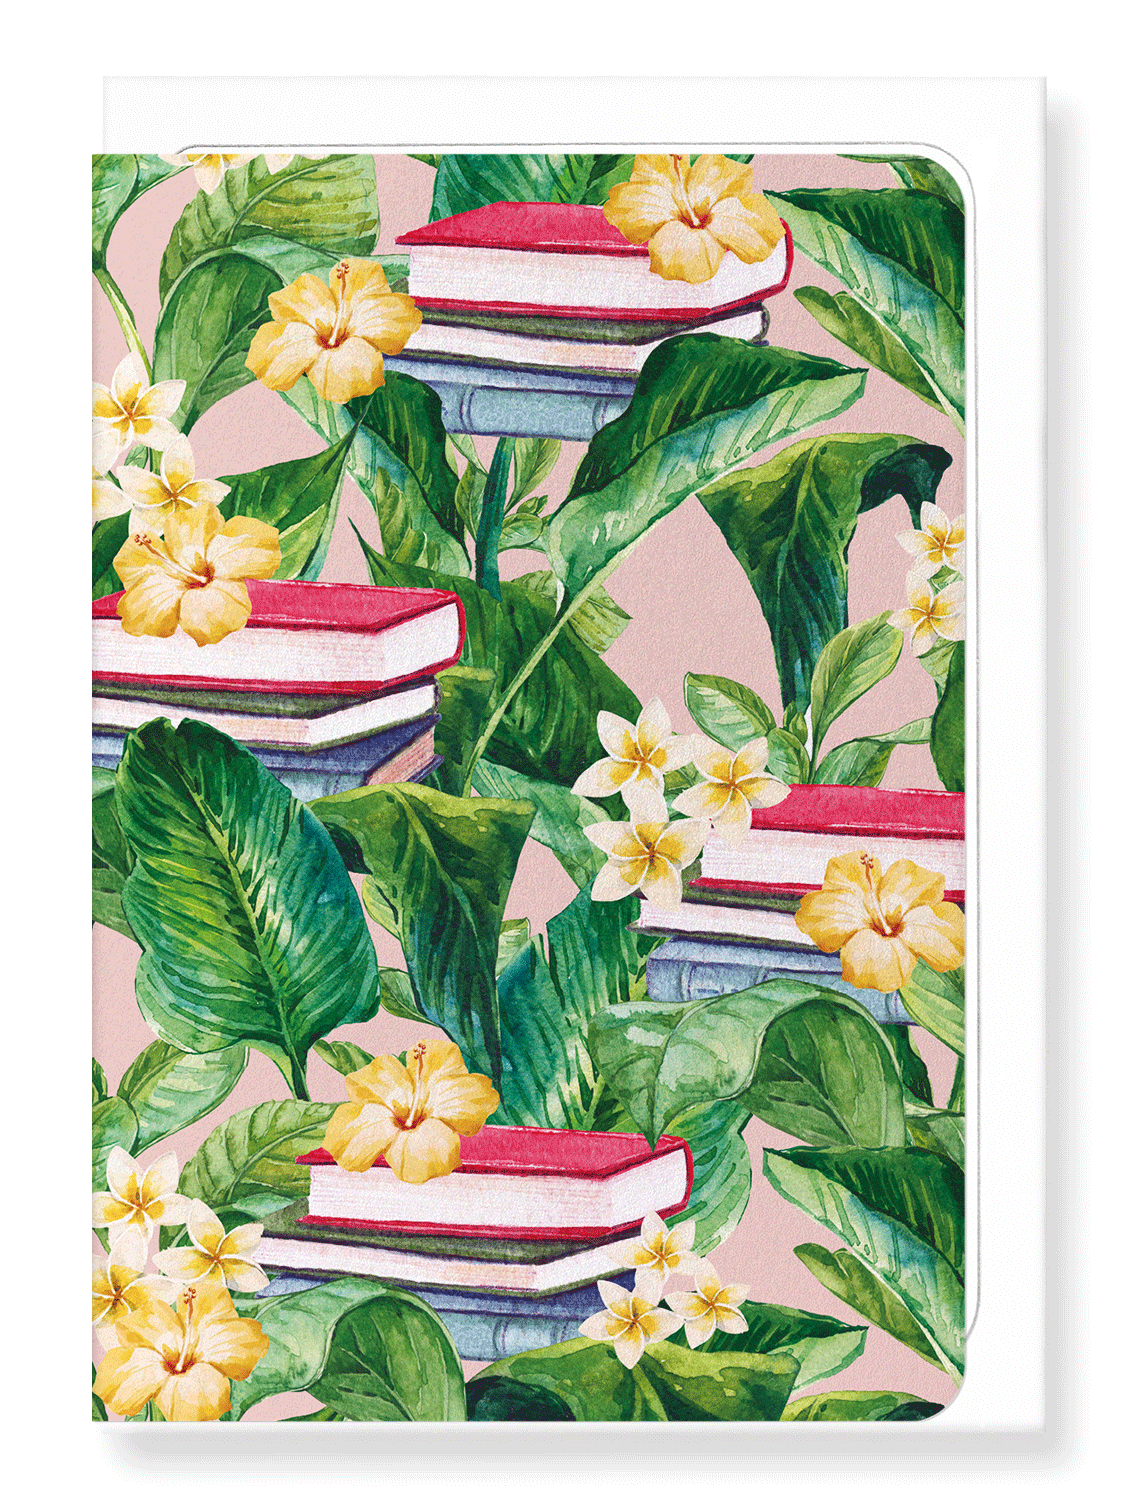 Ezen Designs - Garden of books - Greeting Card - Front